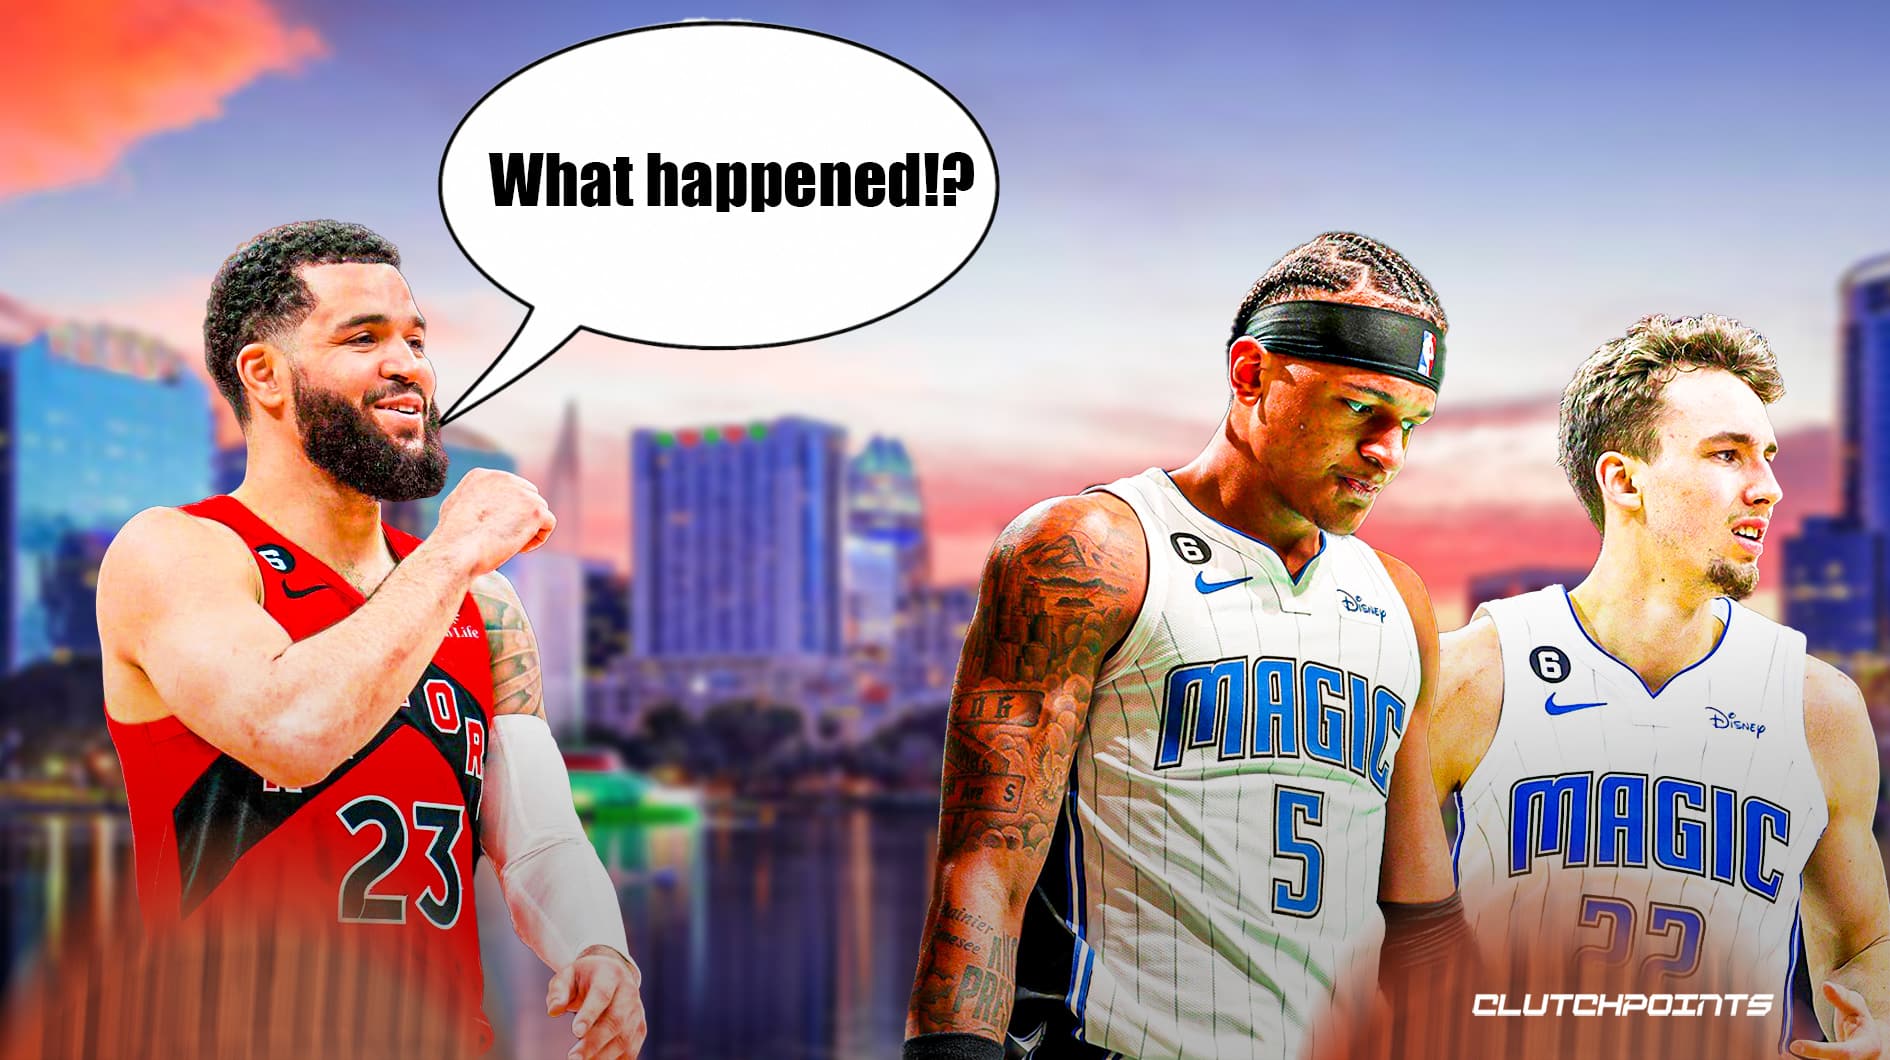 NBA Rumors: Rival Exec Reveals Main Reason Why Wizards Won't Trade